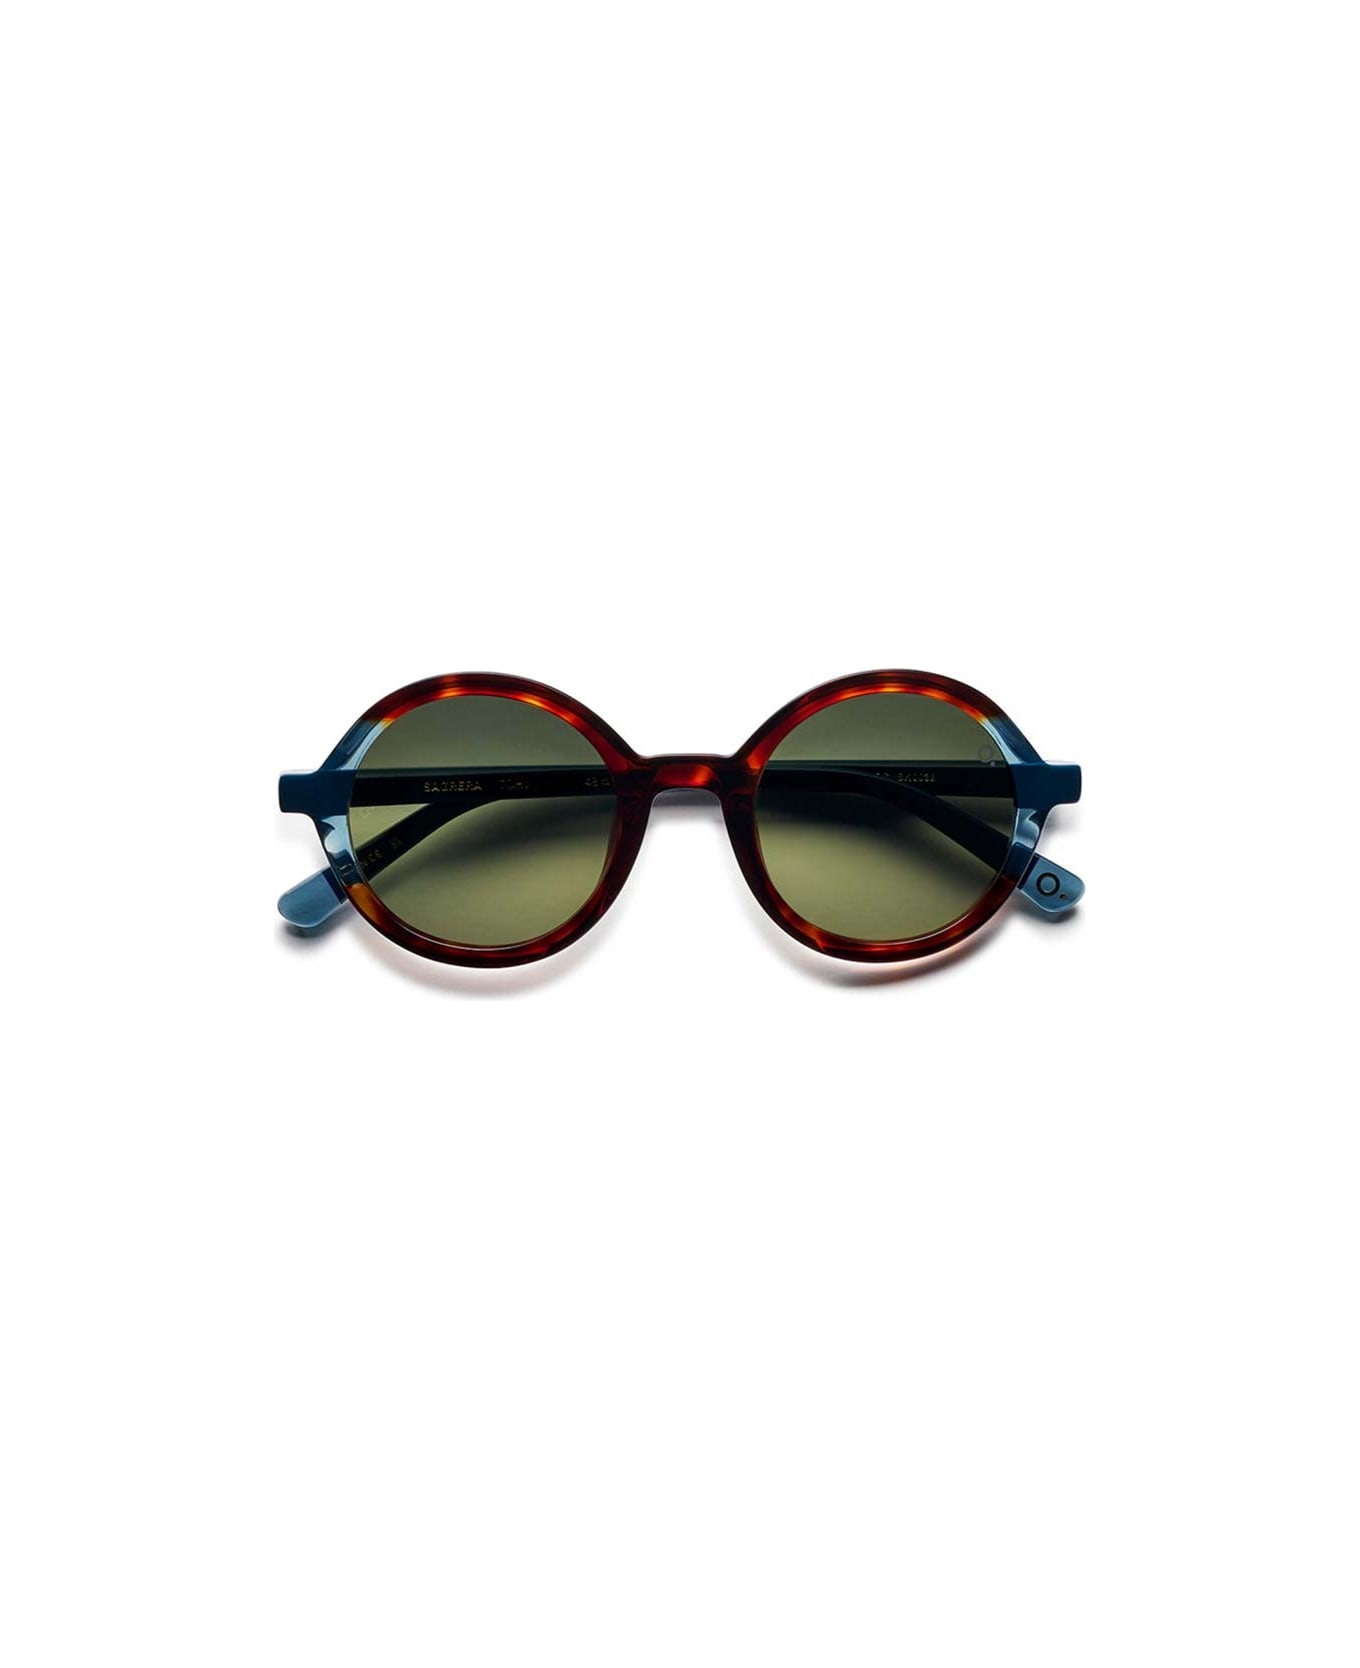 Etnia Barcelona Sunglasses - Havana/Verde